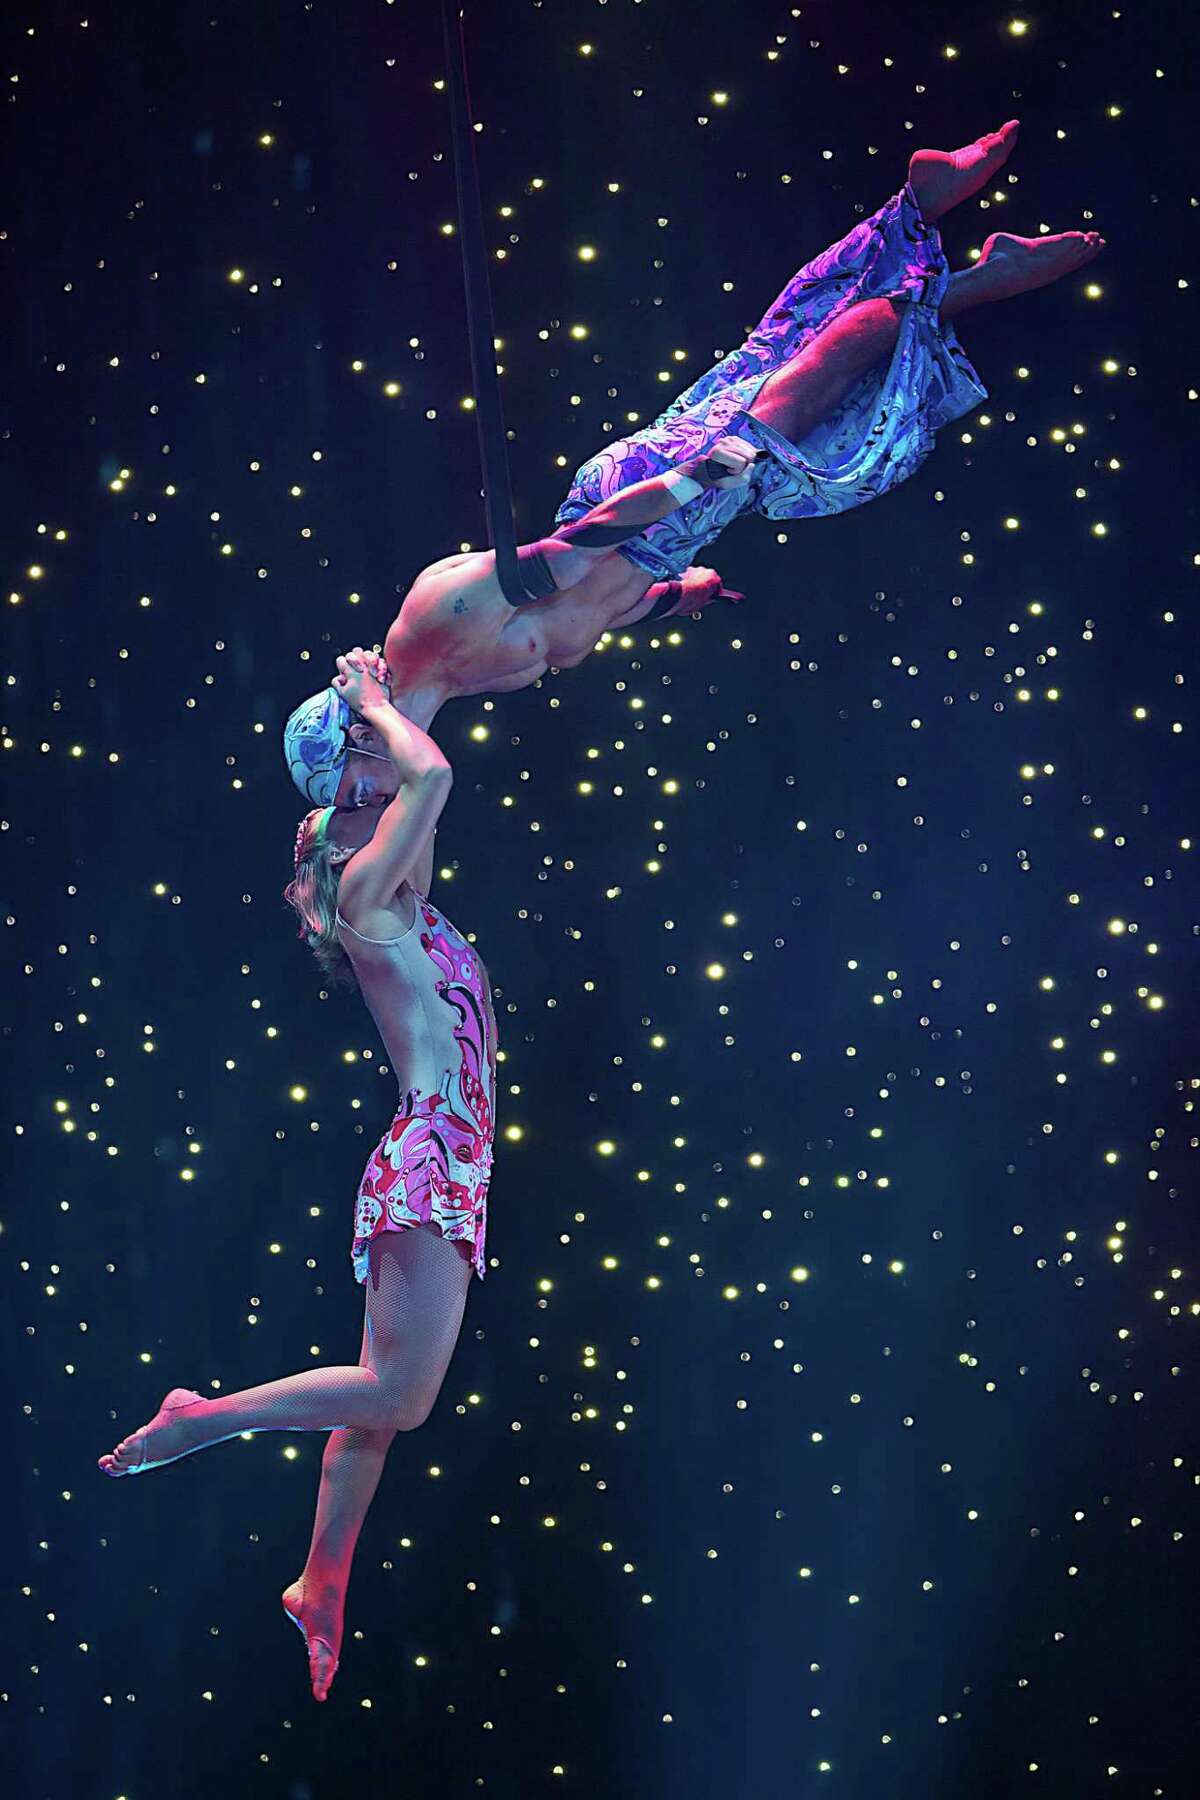 “Cirque Celebration 2020” comes to Mohegan Sun Arena Dec. 28-30.